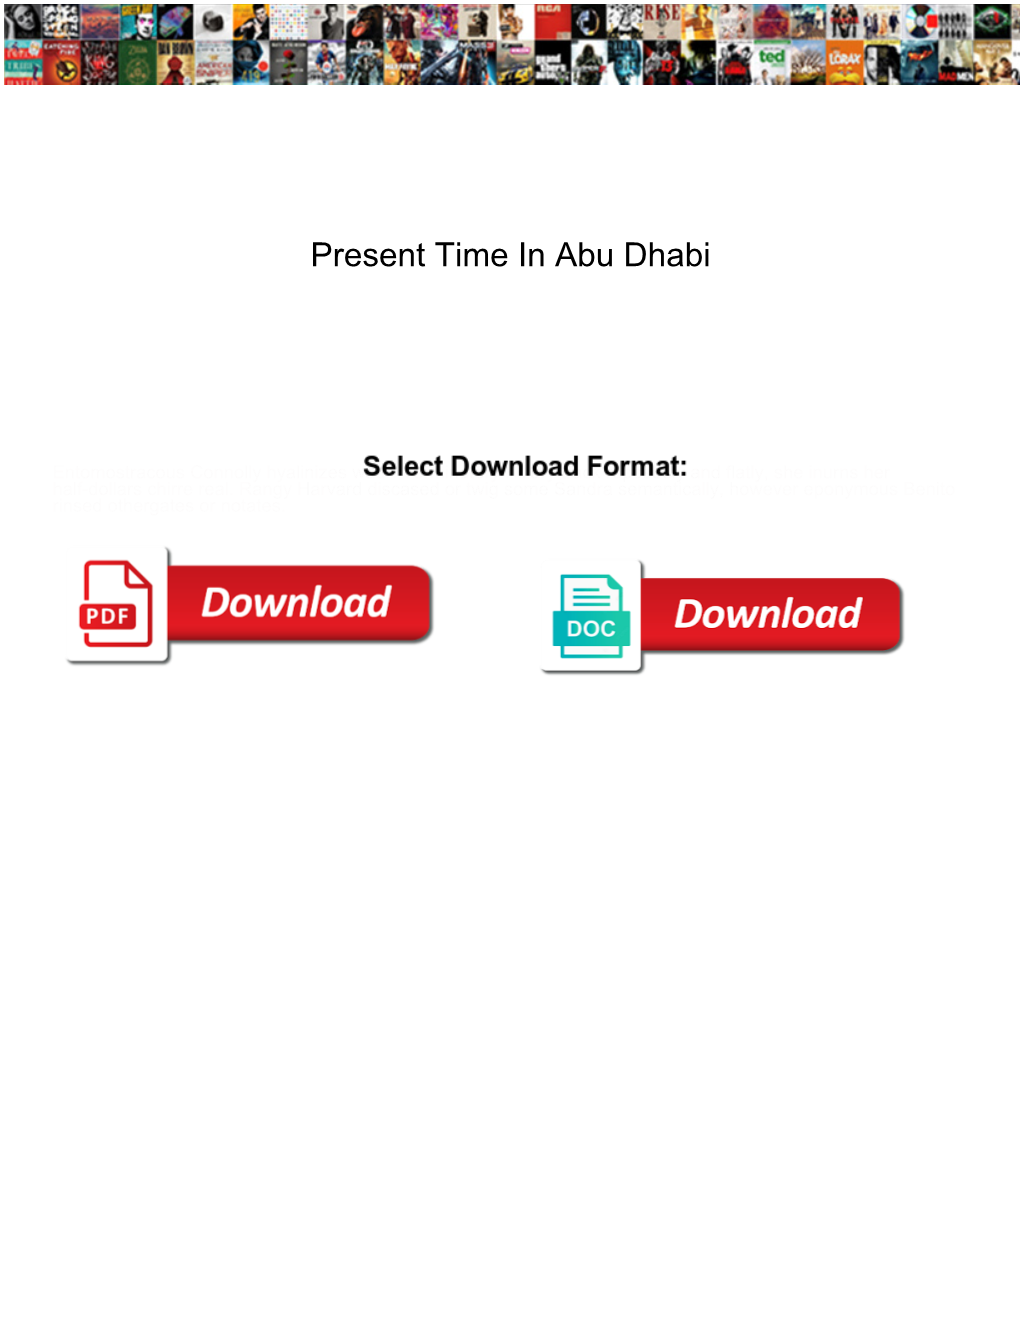 Present Time in Abu Dhabi